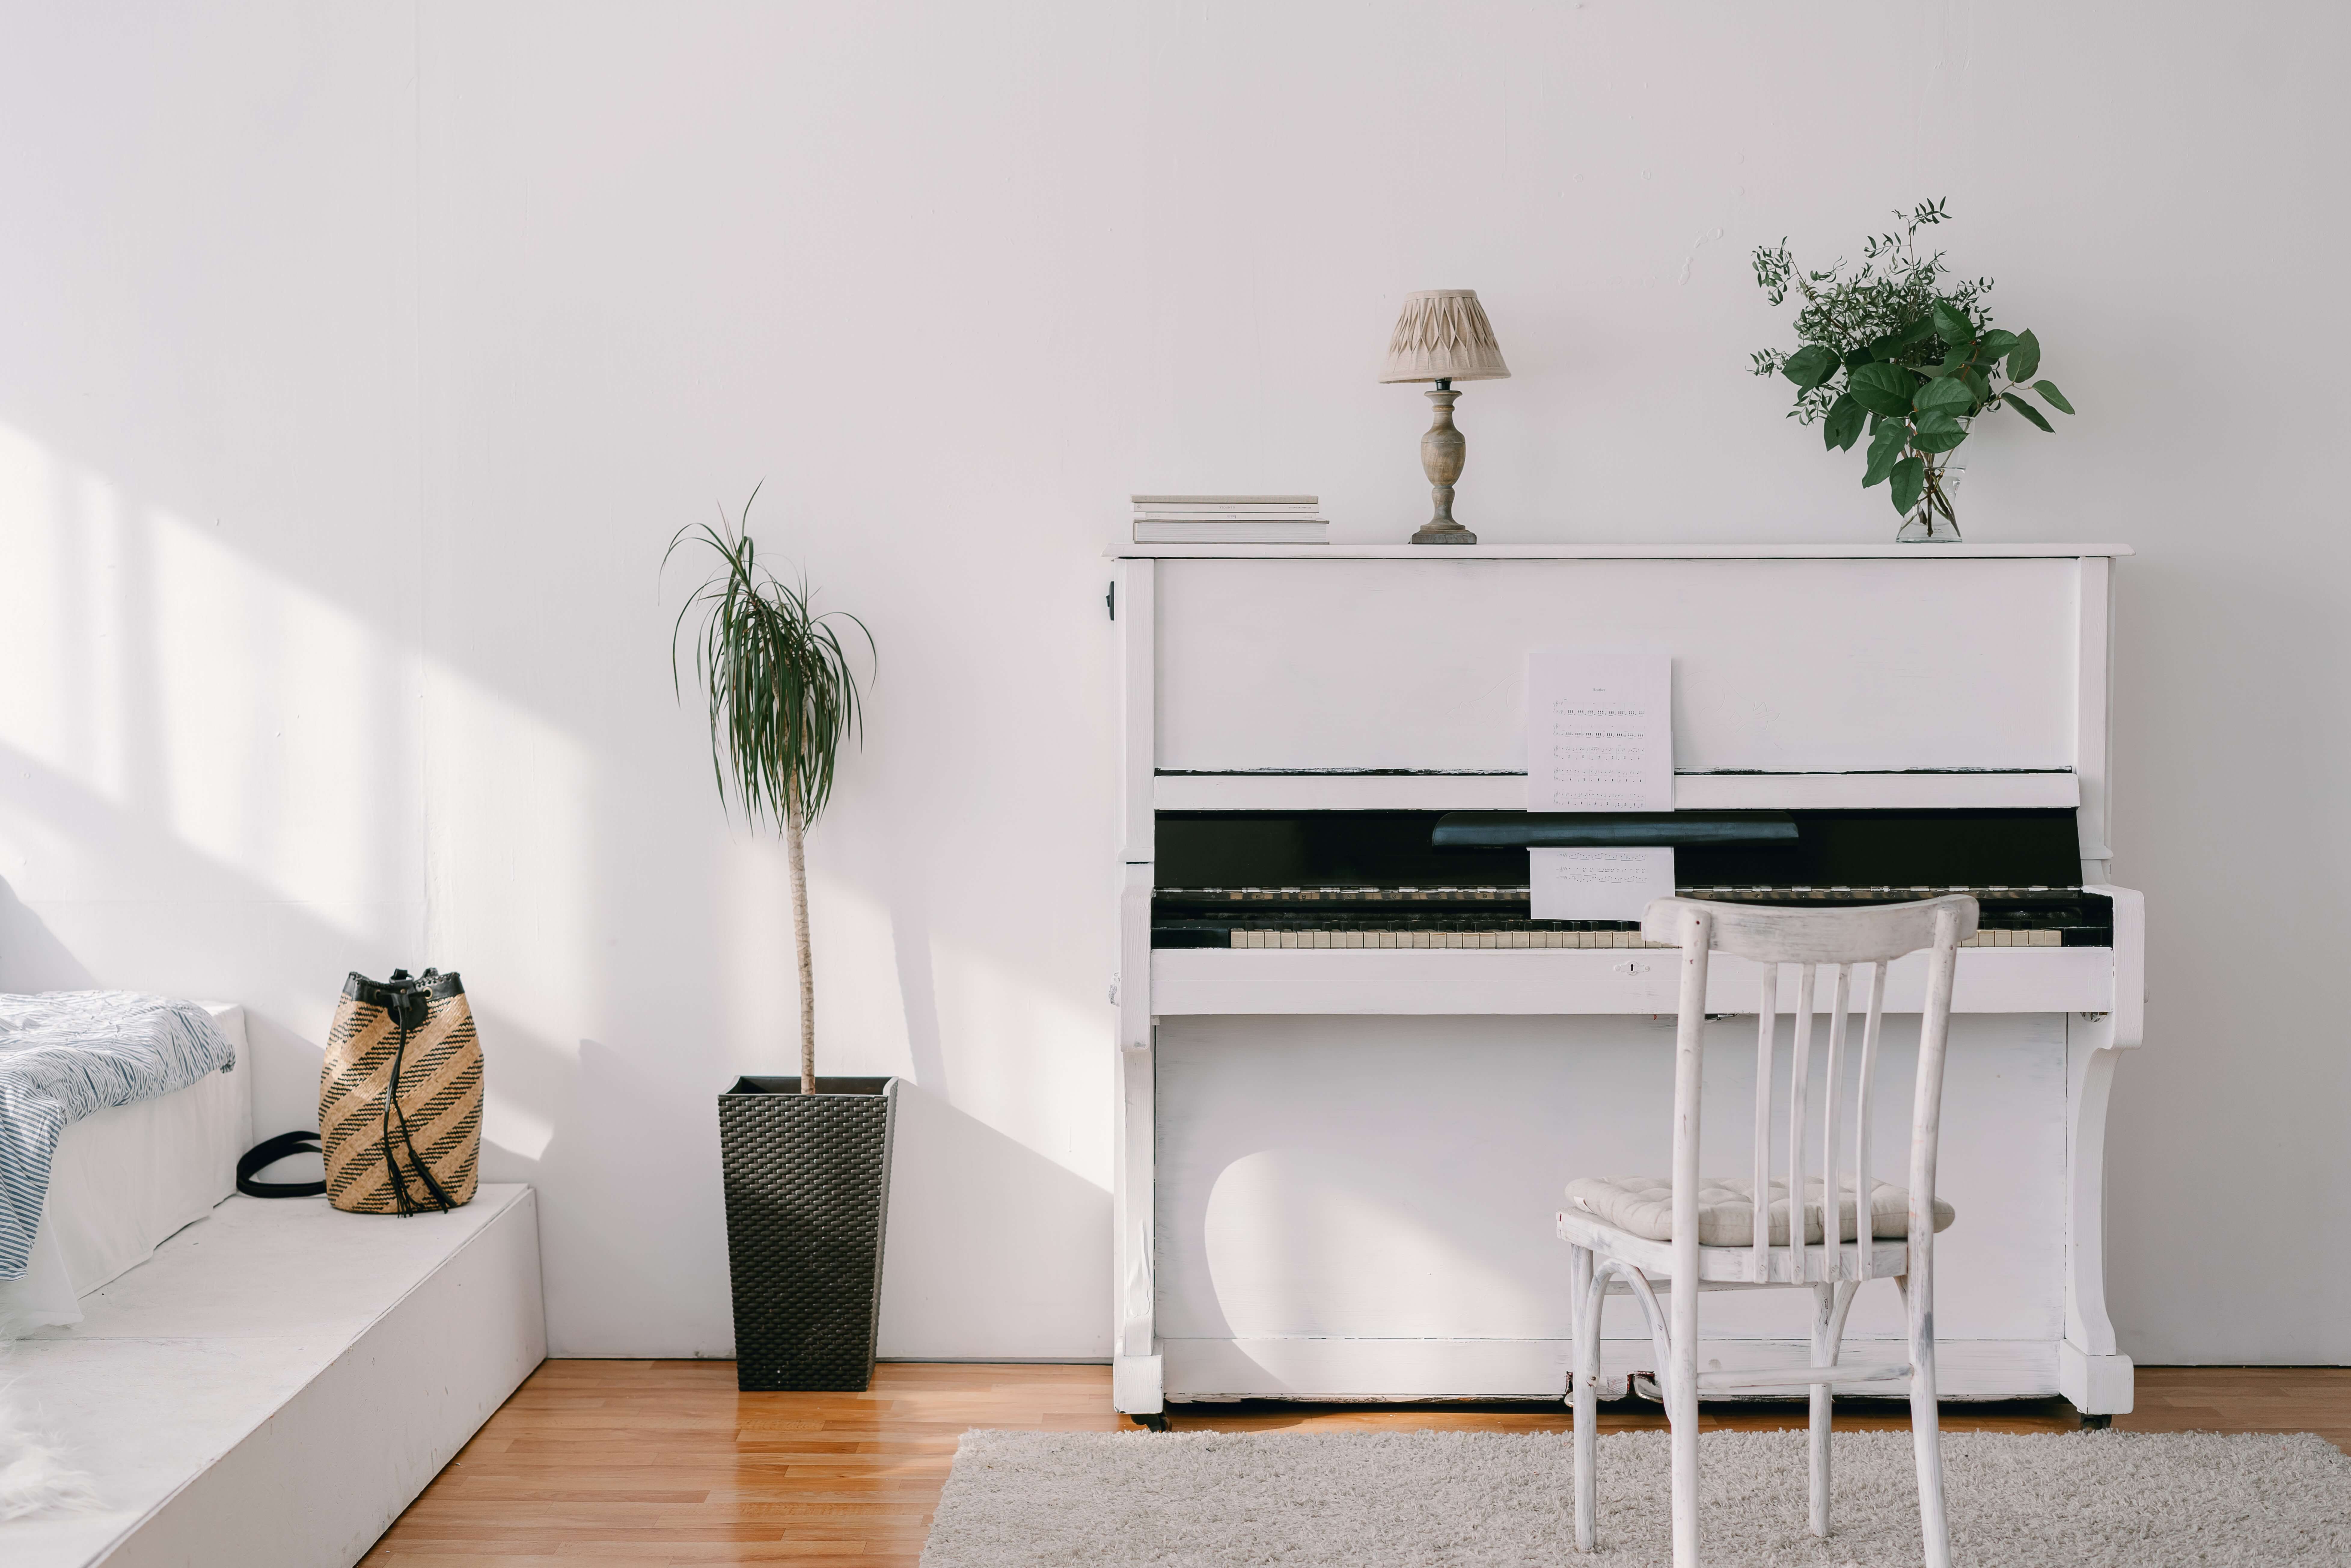 Most Elegant and Minimalist Home Decor Design Trends You Should Consider